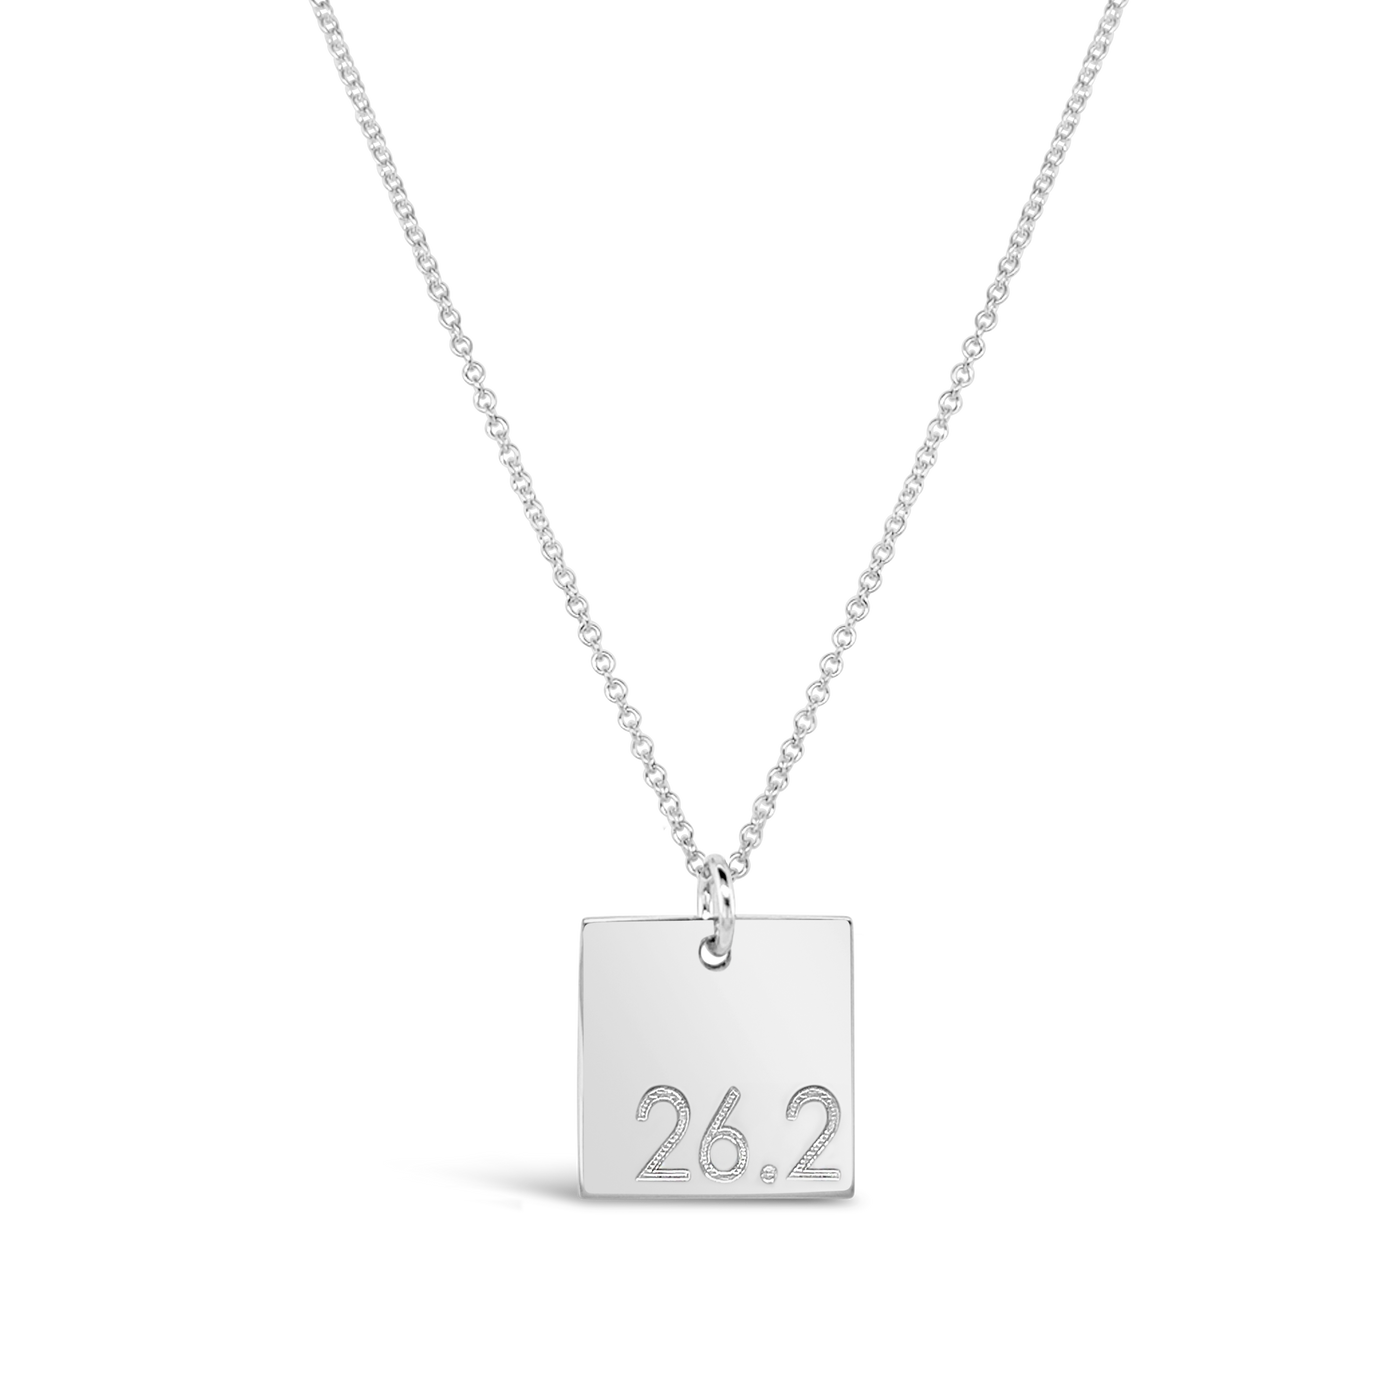 26.2 Square Necklace